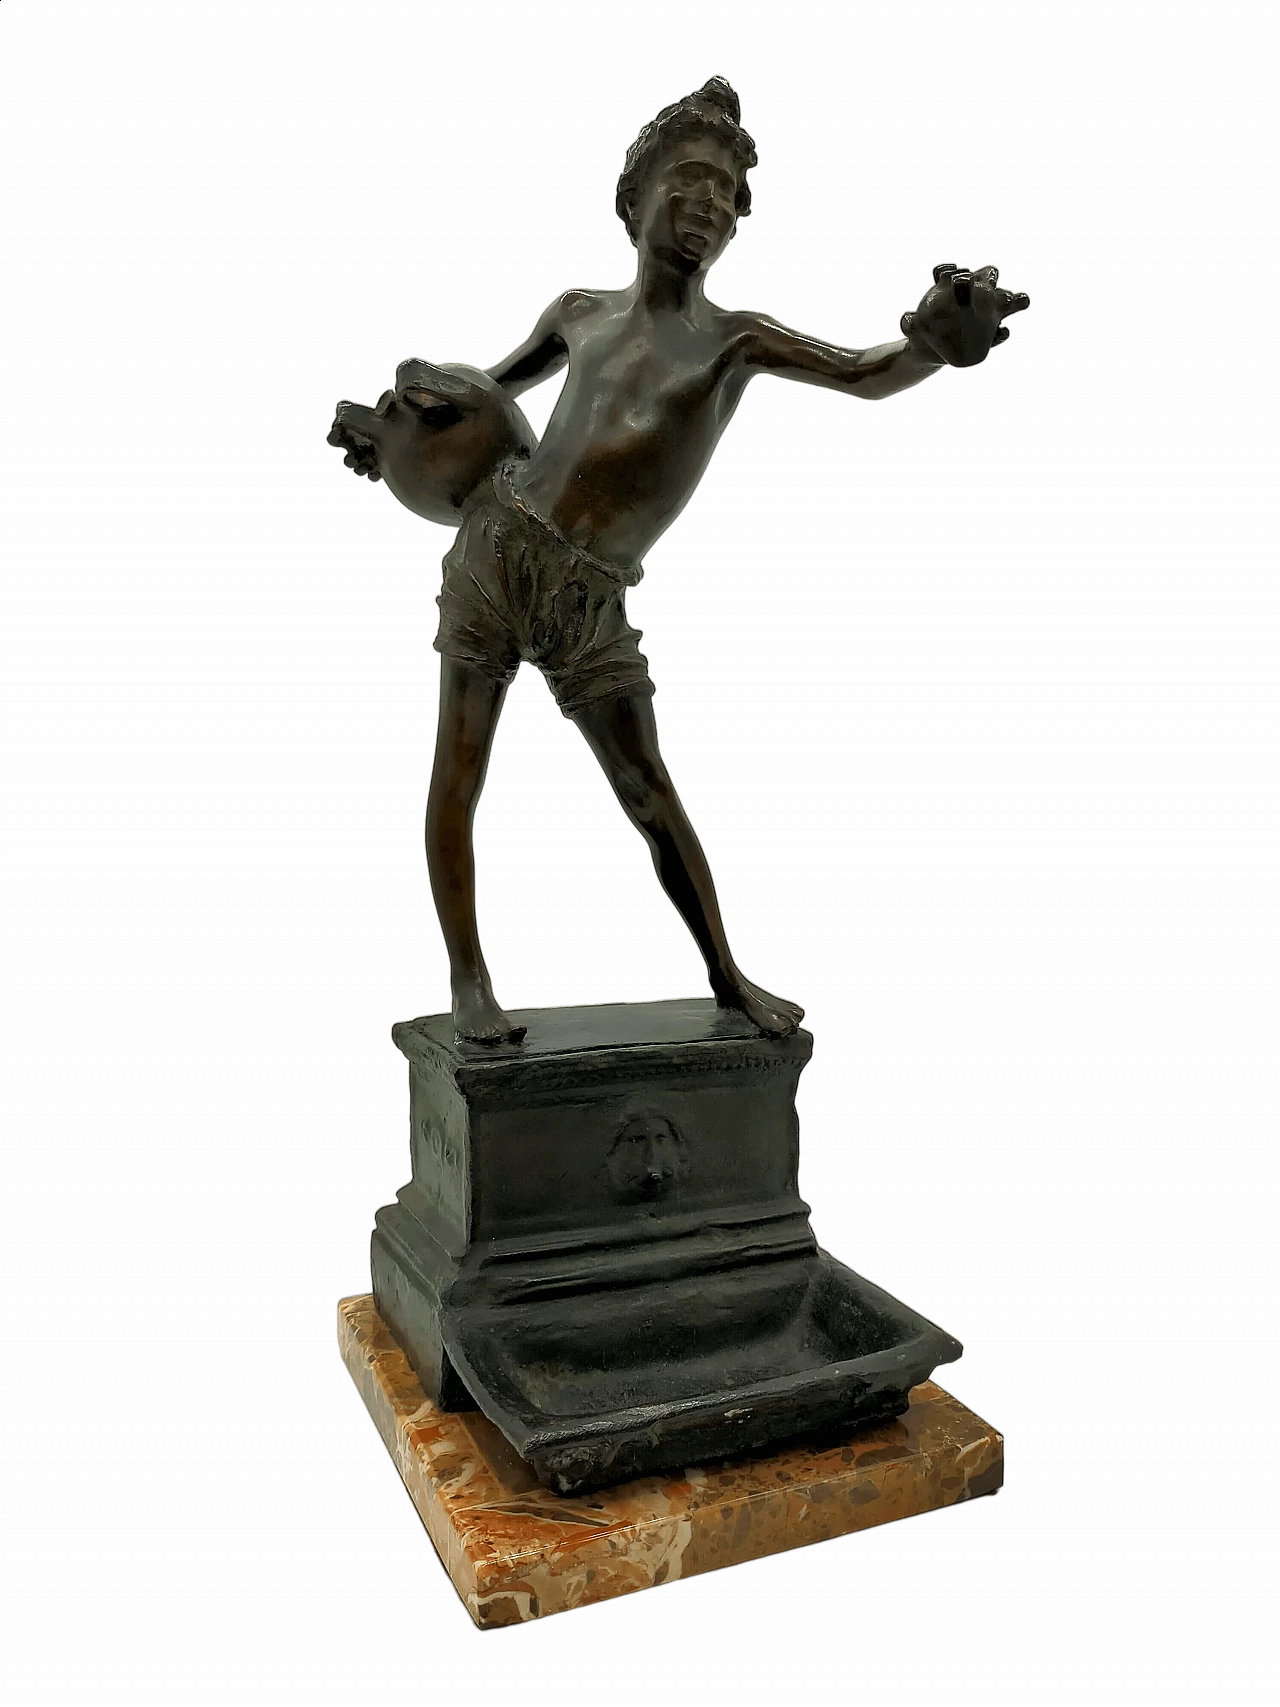 Vincenzo Gemito, The Waterman, bronze sculpture, late 19th century 13